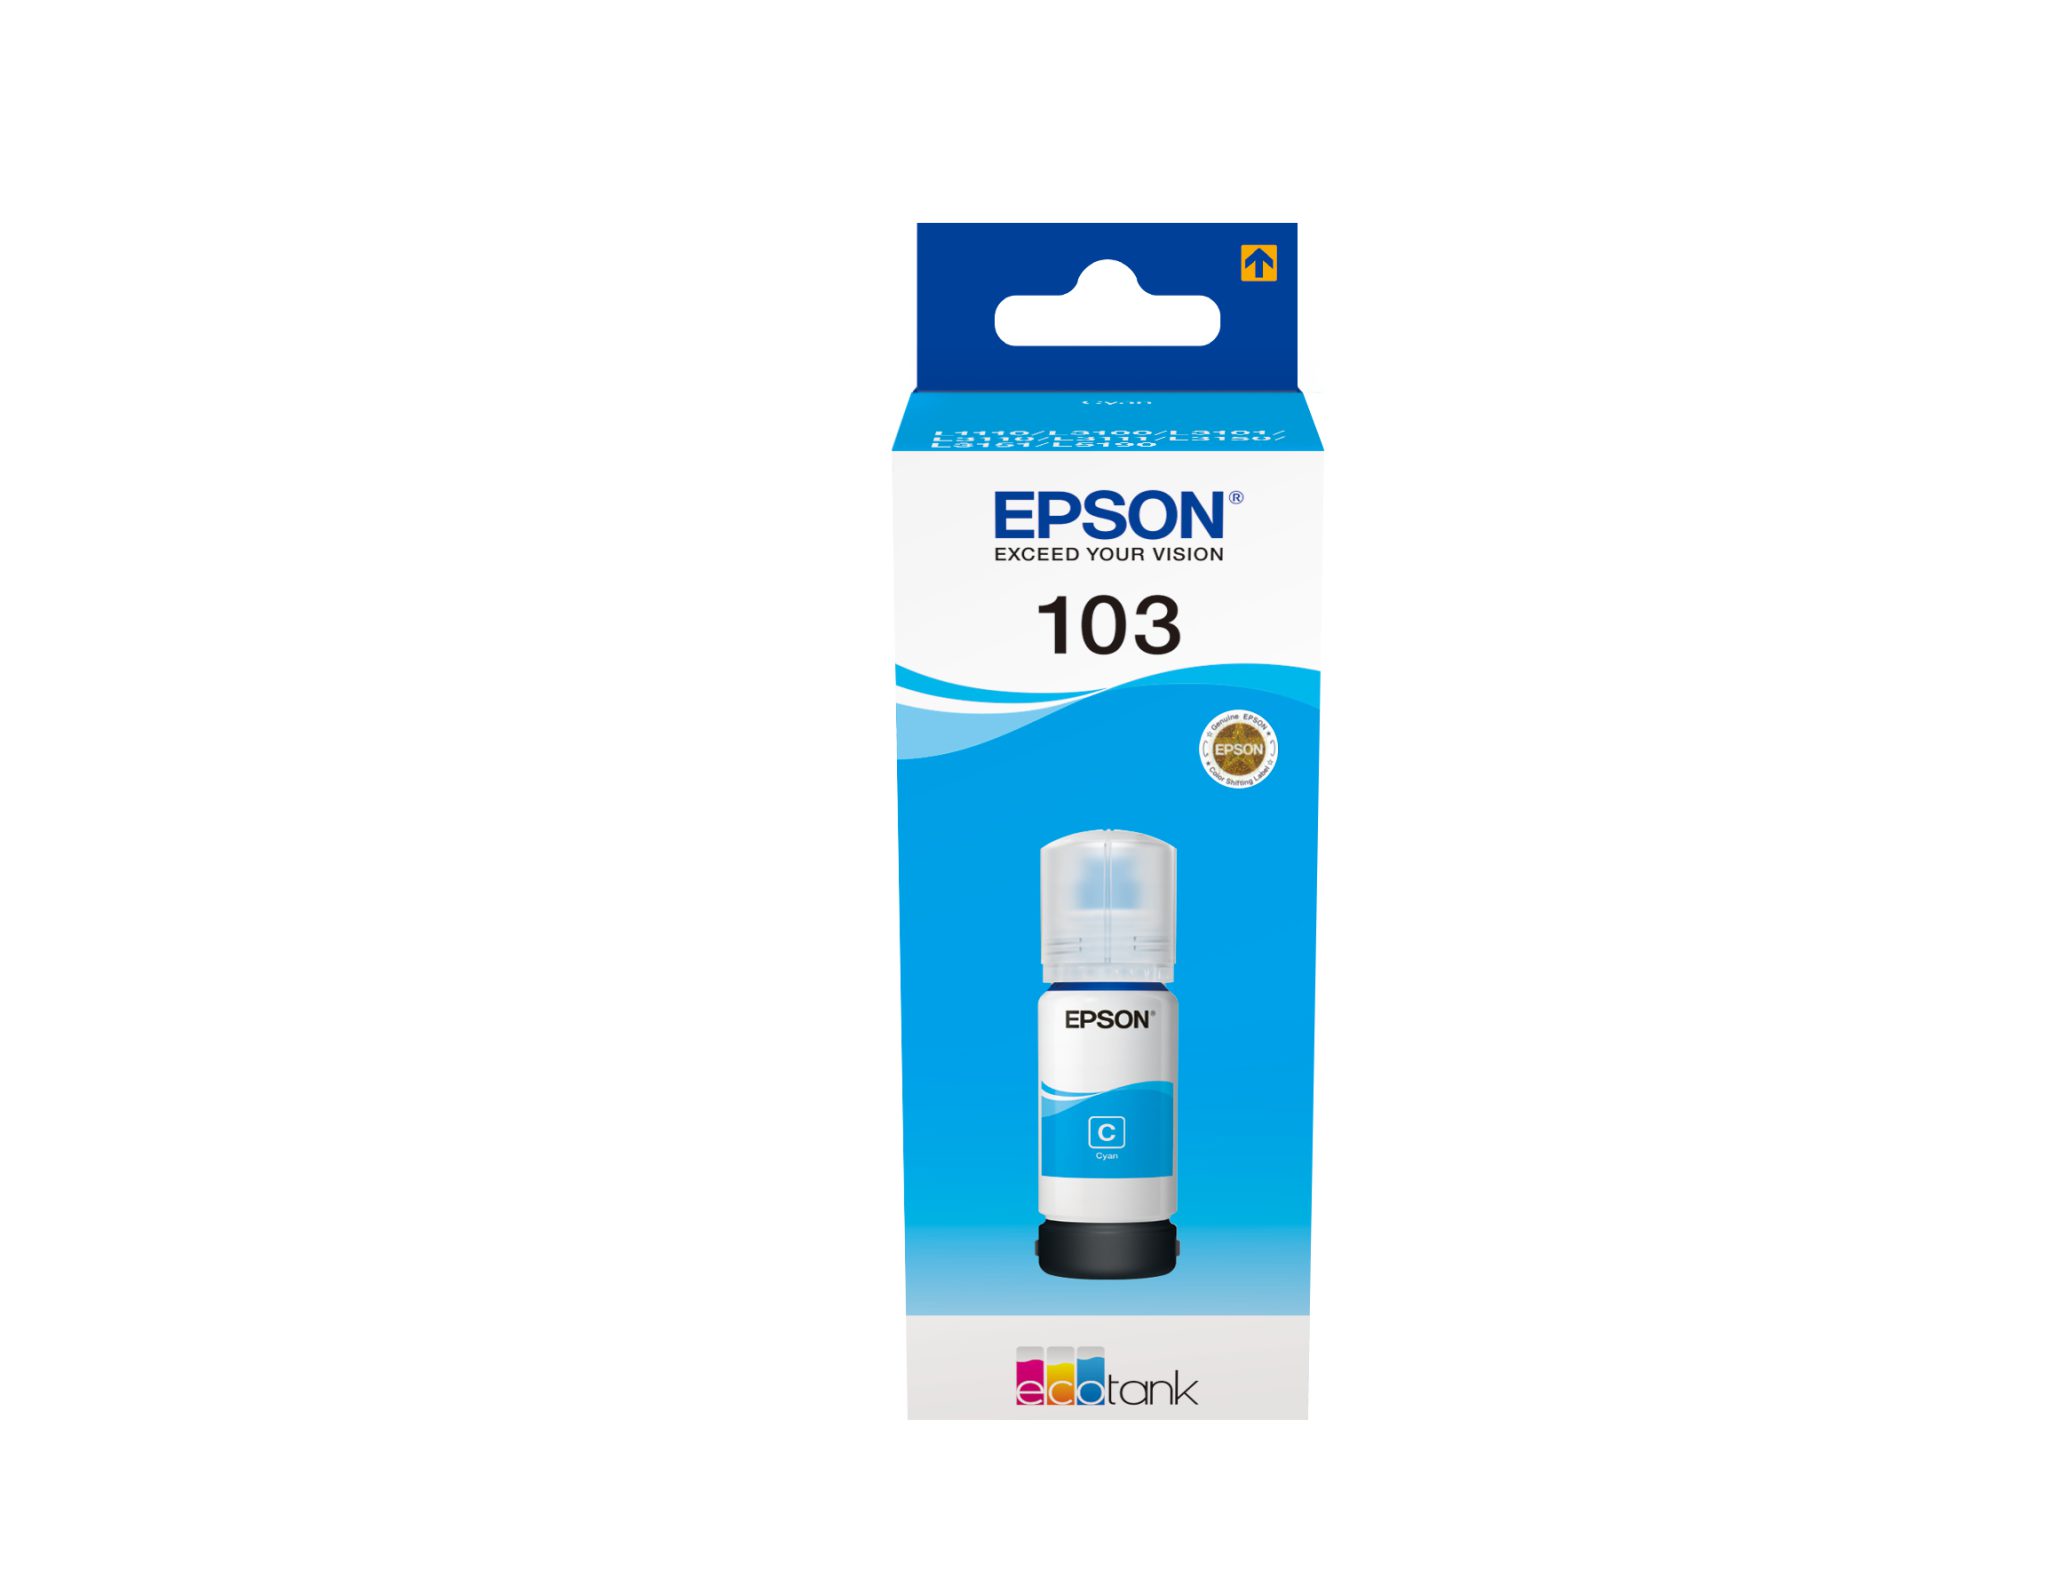 EPSON 103 EcoTank Cyan ink bottle local